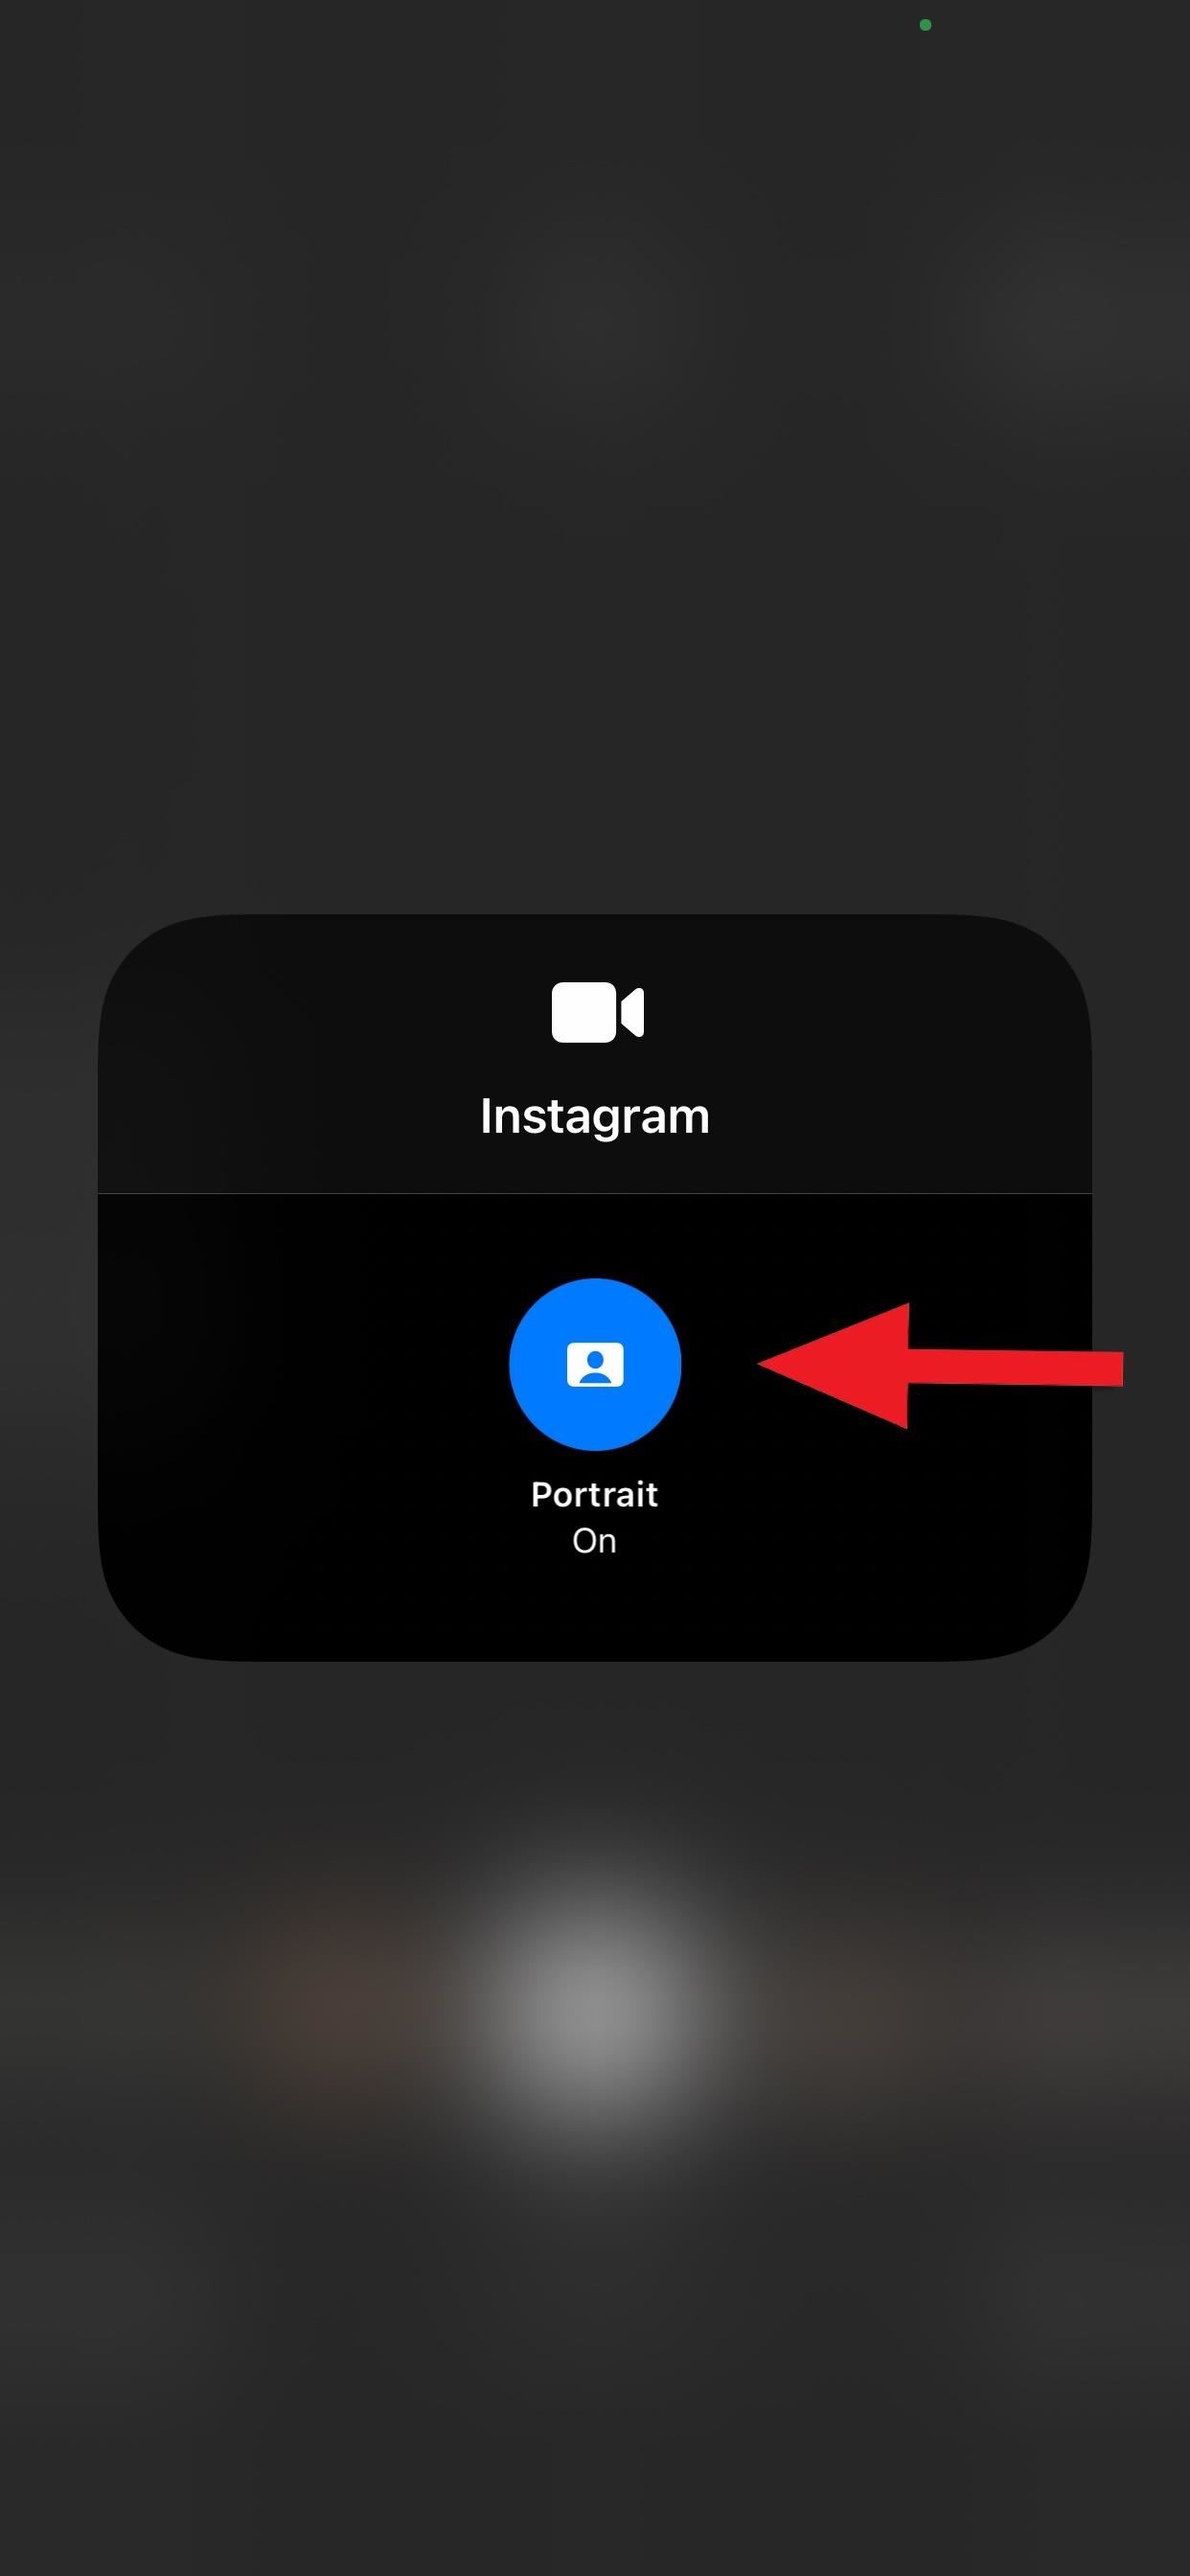 Unlock Your iPhone's Hidden Selfie Portrait Mode for Facebook, Instagram, Snapchat, Zoom, and Other Popular Apps